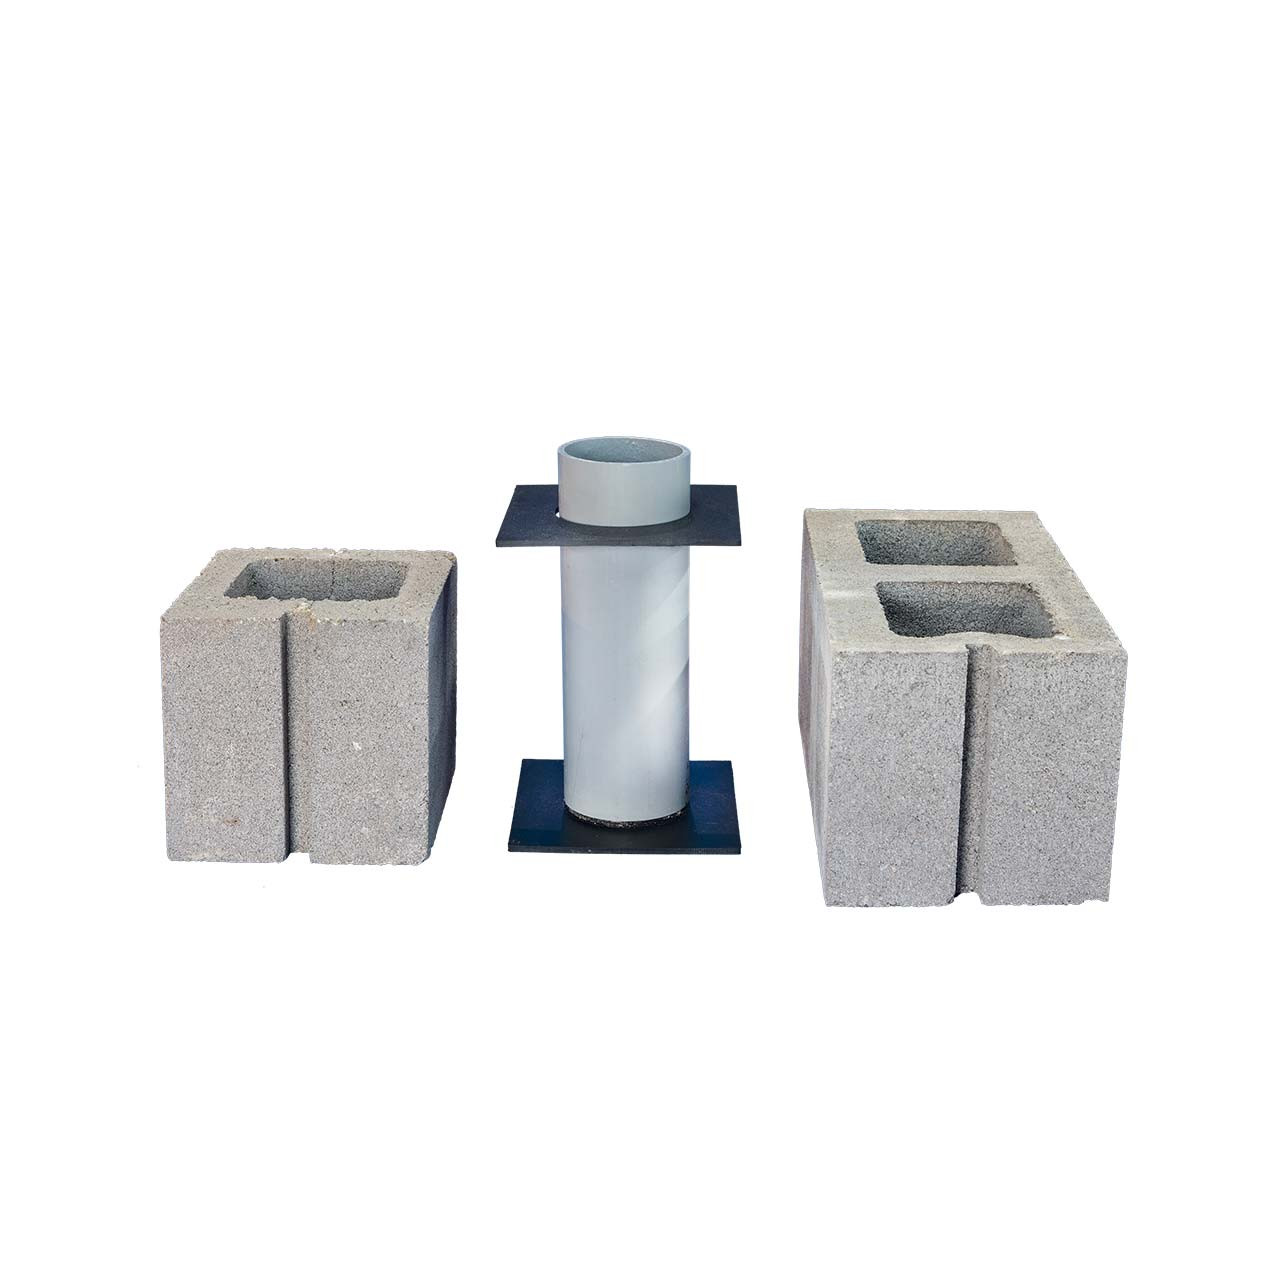 Concrete Block Adapter with Blocks